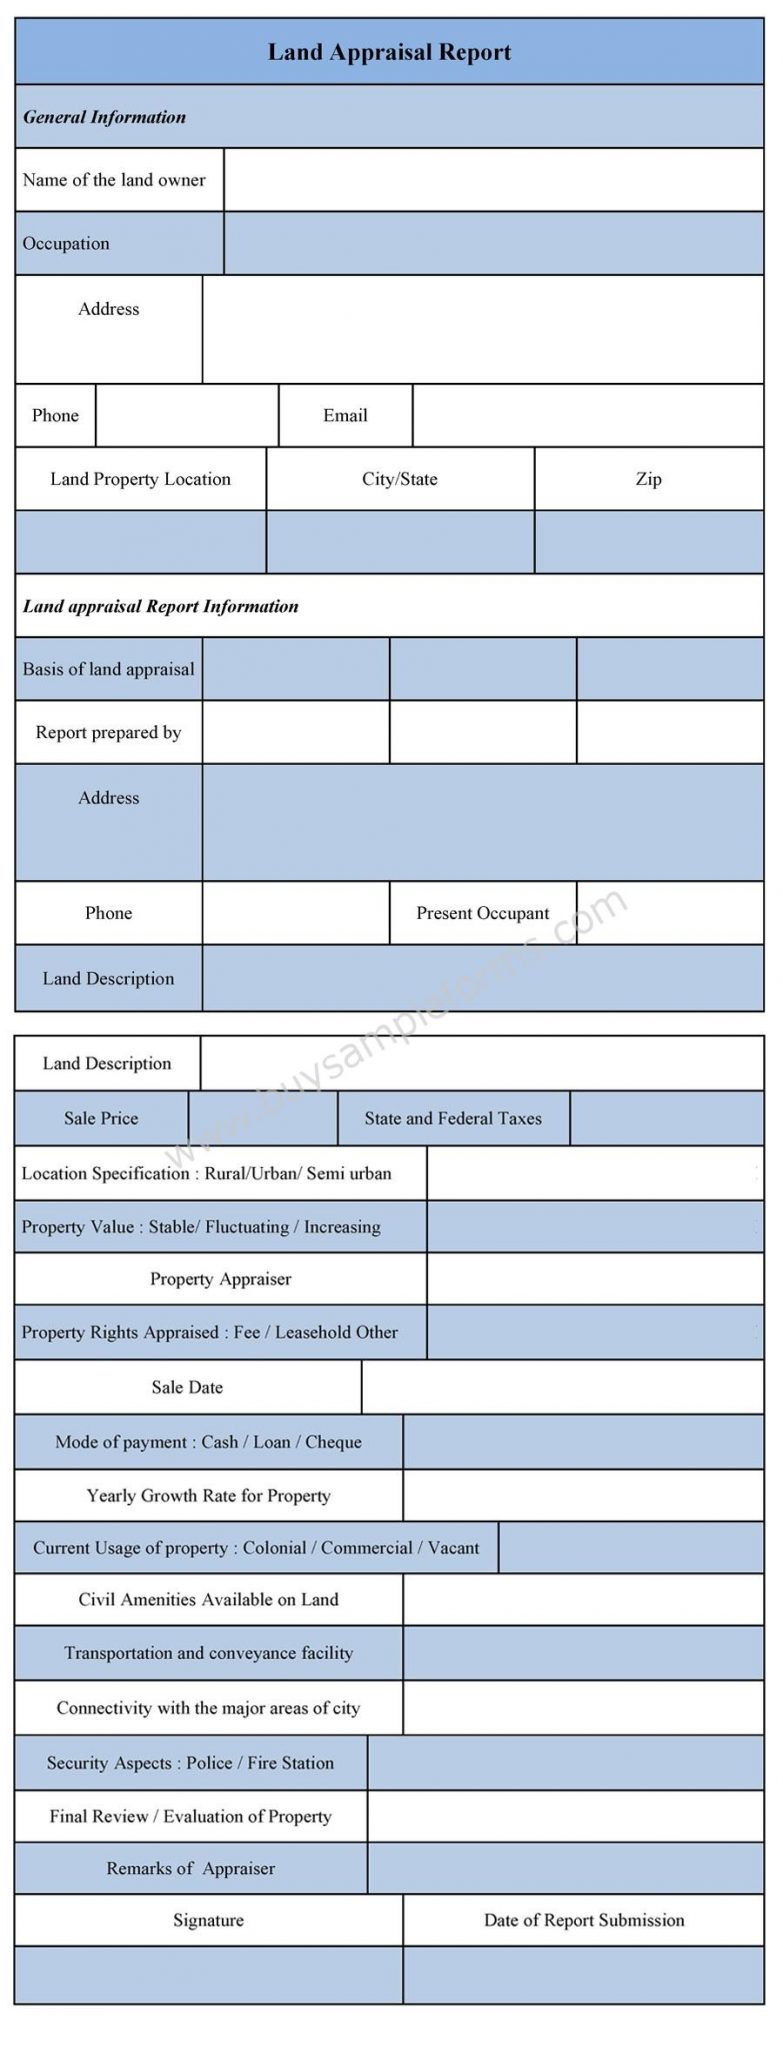 Land Appraisal Report Form